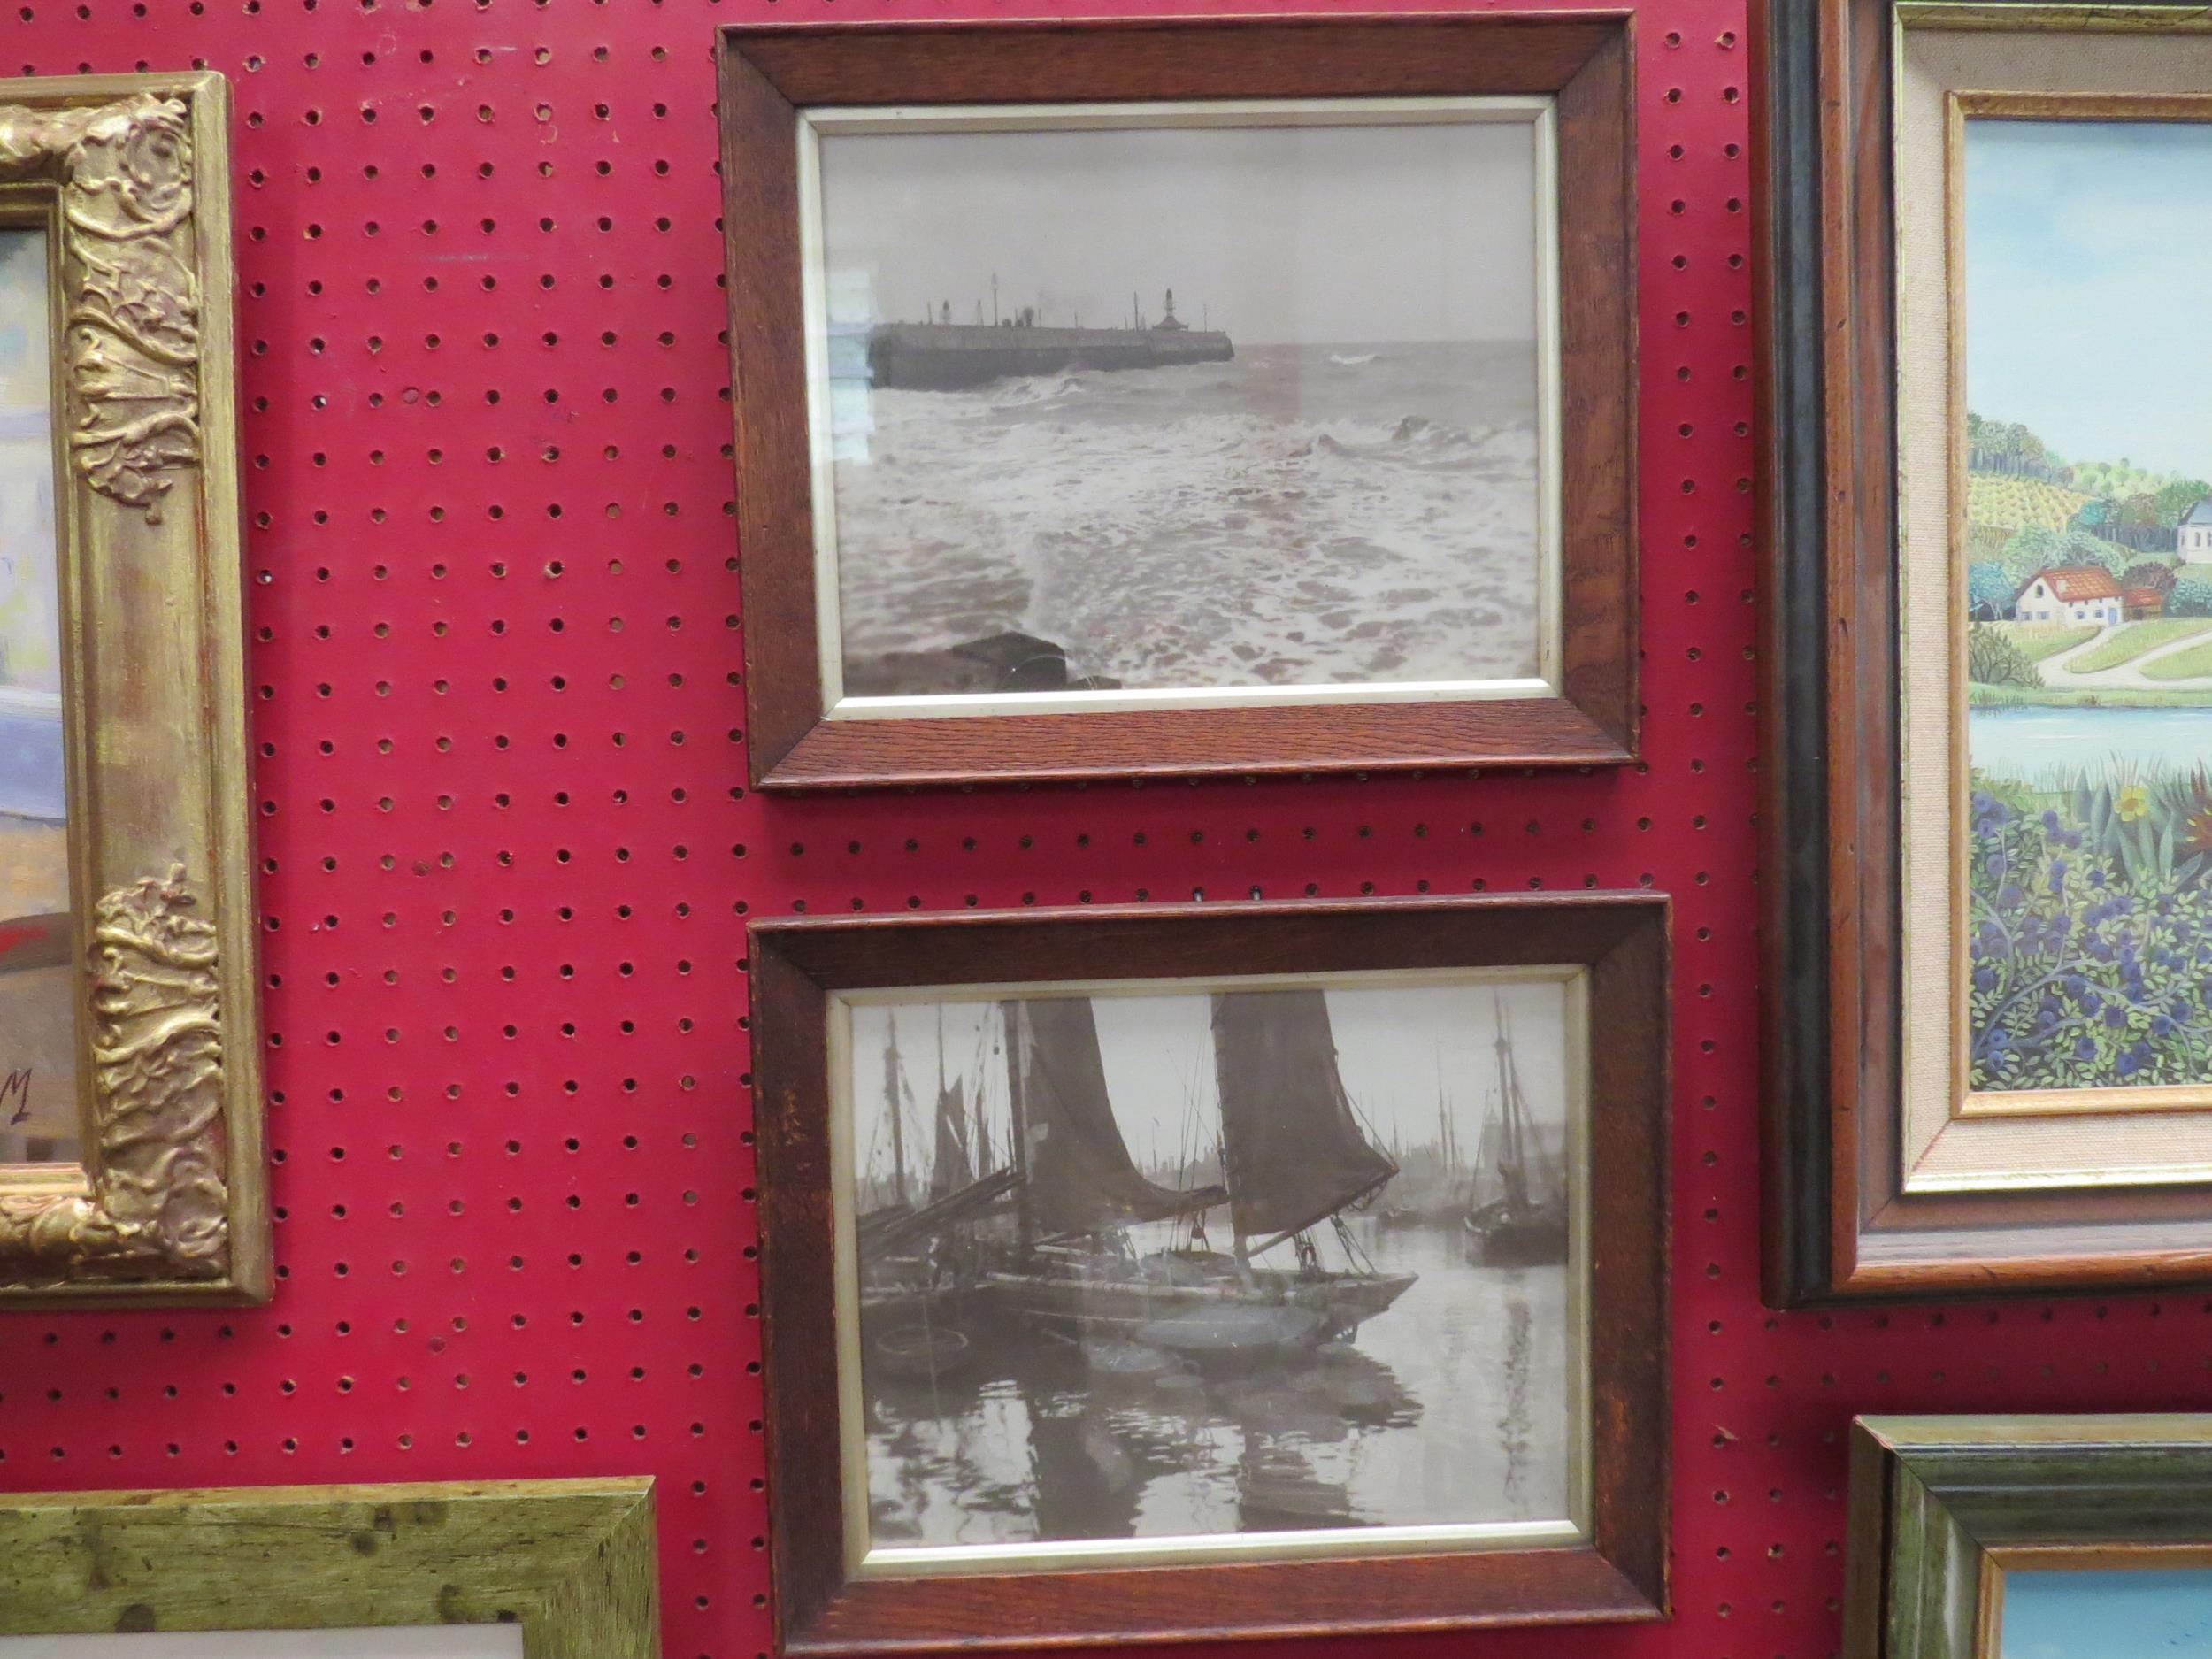 A pair of oak framed vintage photographs of Lowestoft pier and harbour, 18cm x 23cm image sizes